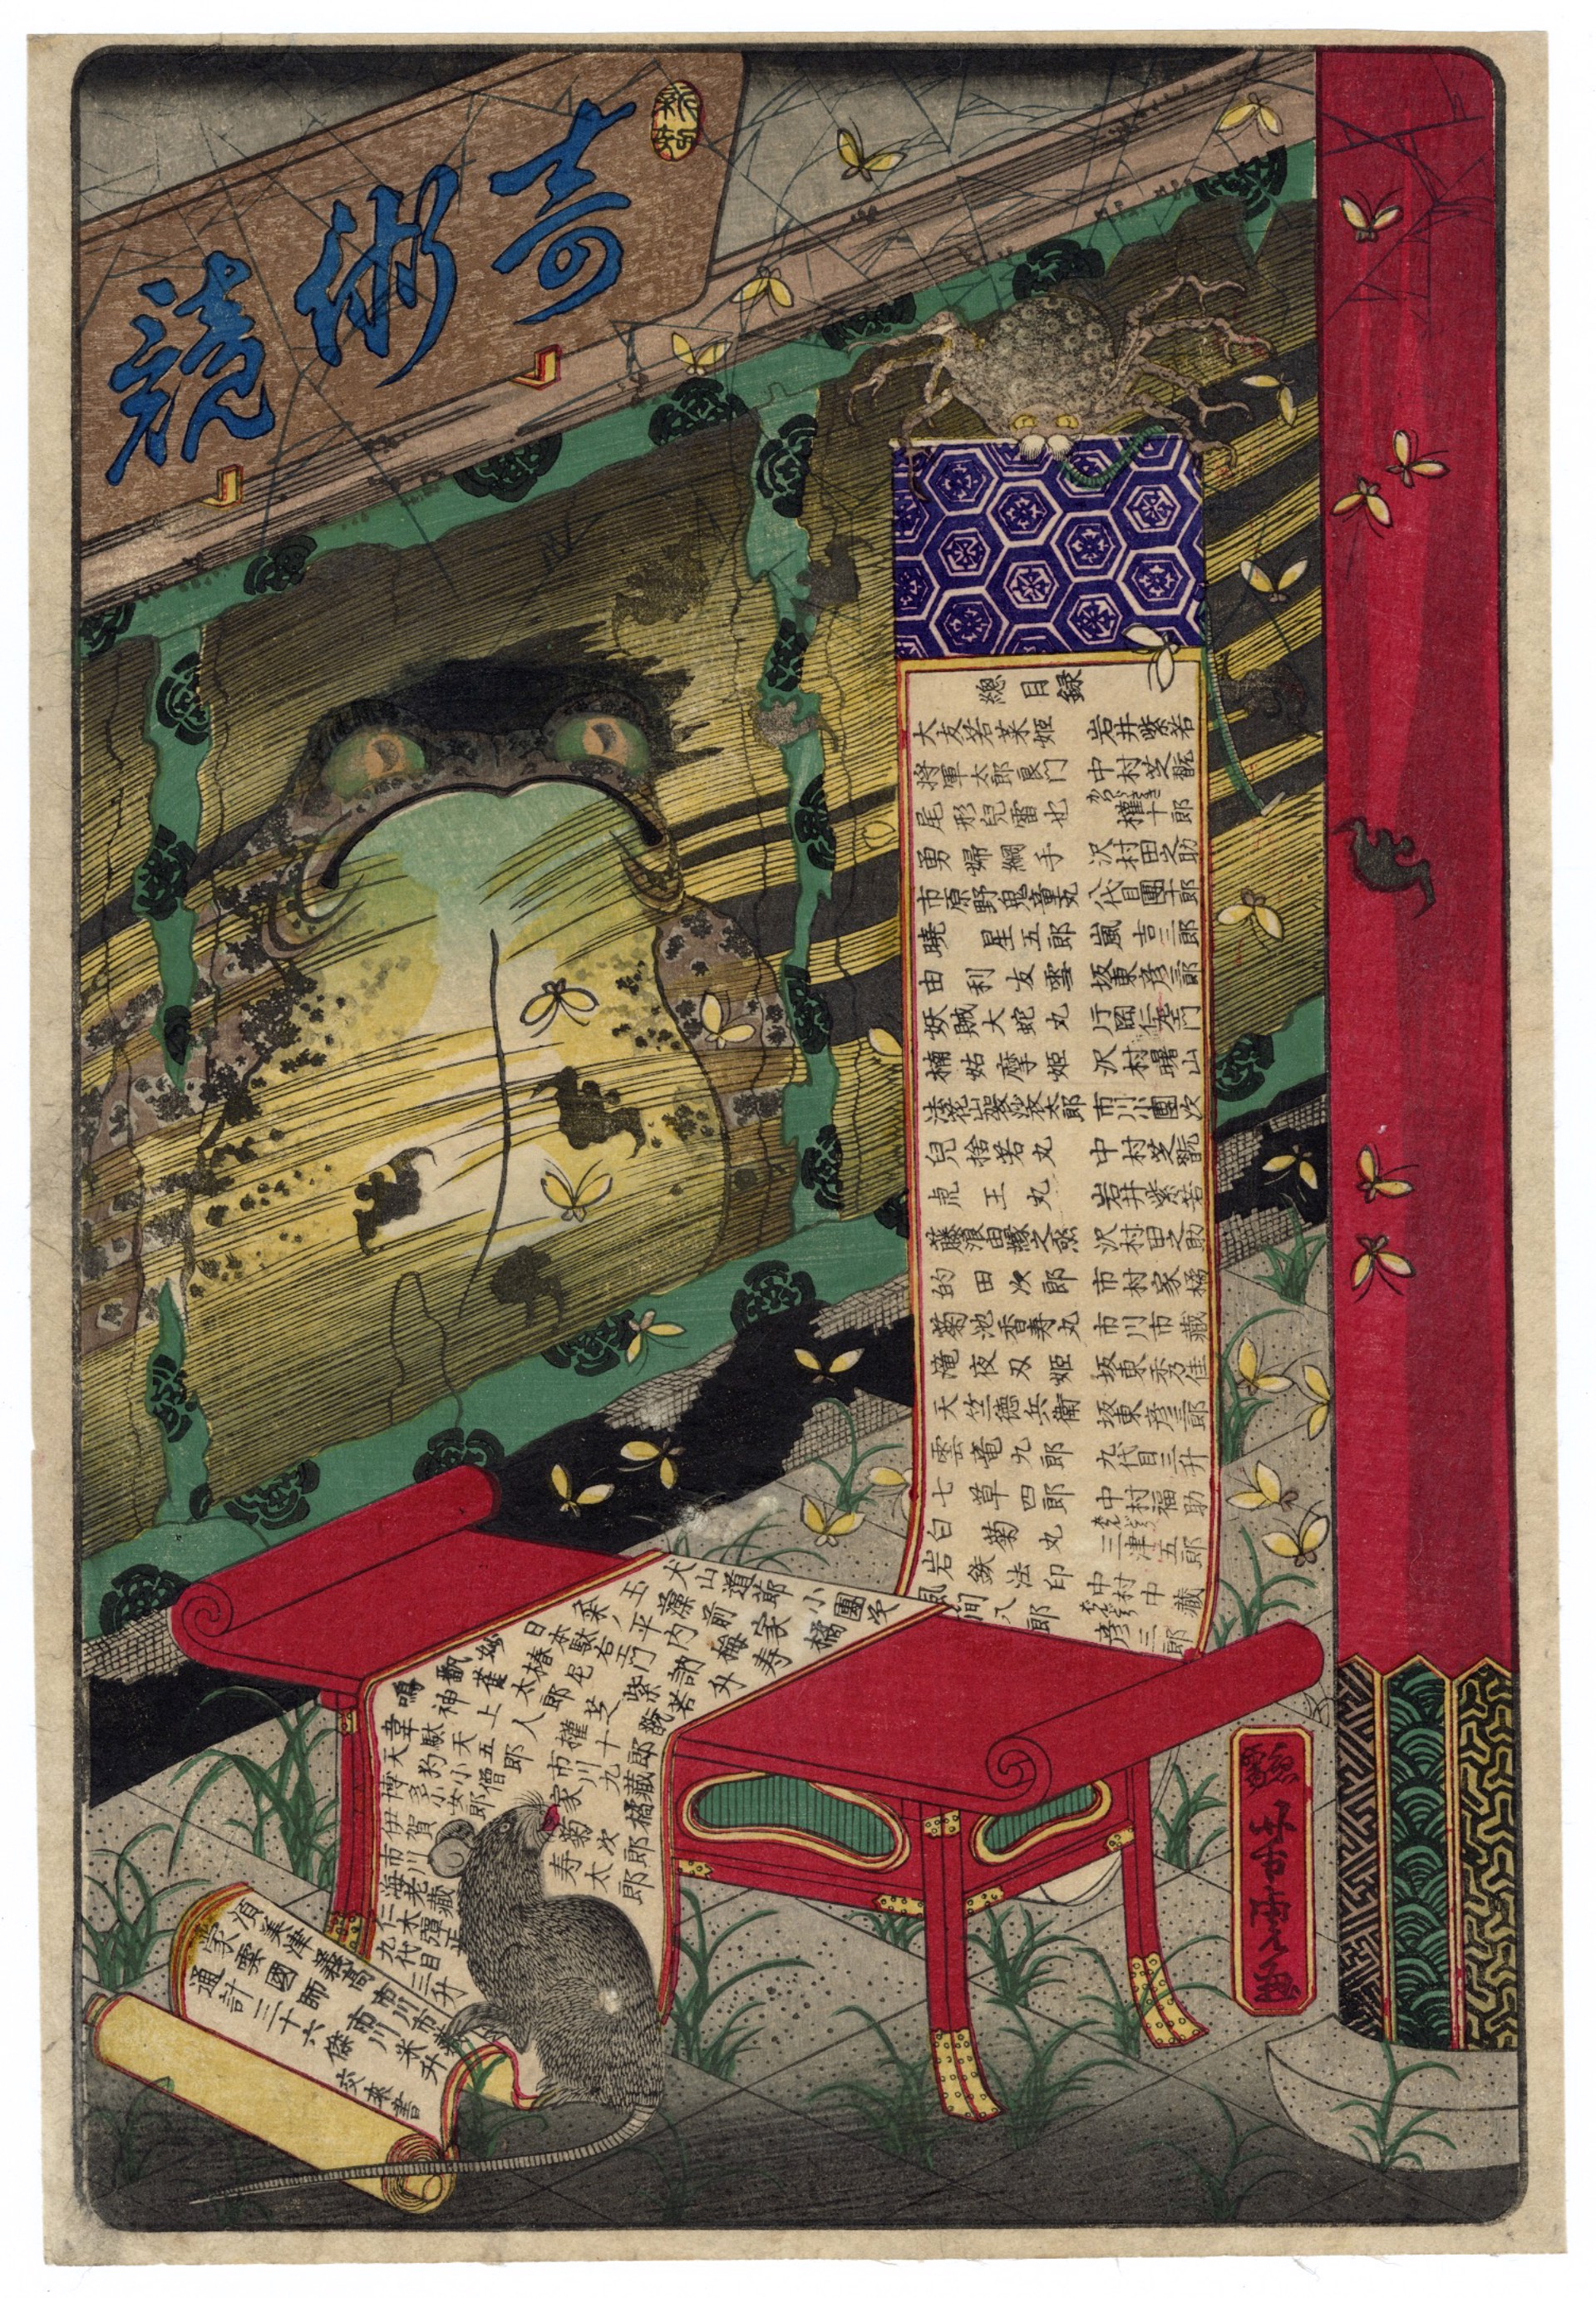 Index of Toyokuni III (Kunisada) Series "A Contest of Magic Scenes By Toyokuni" by Yoshitora